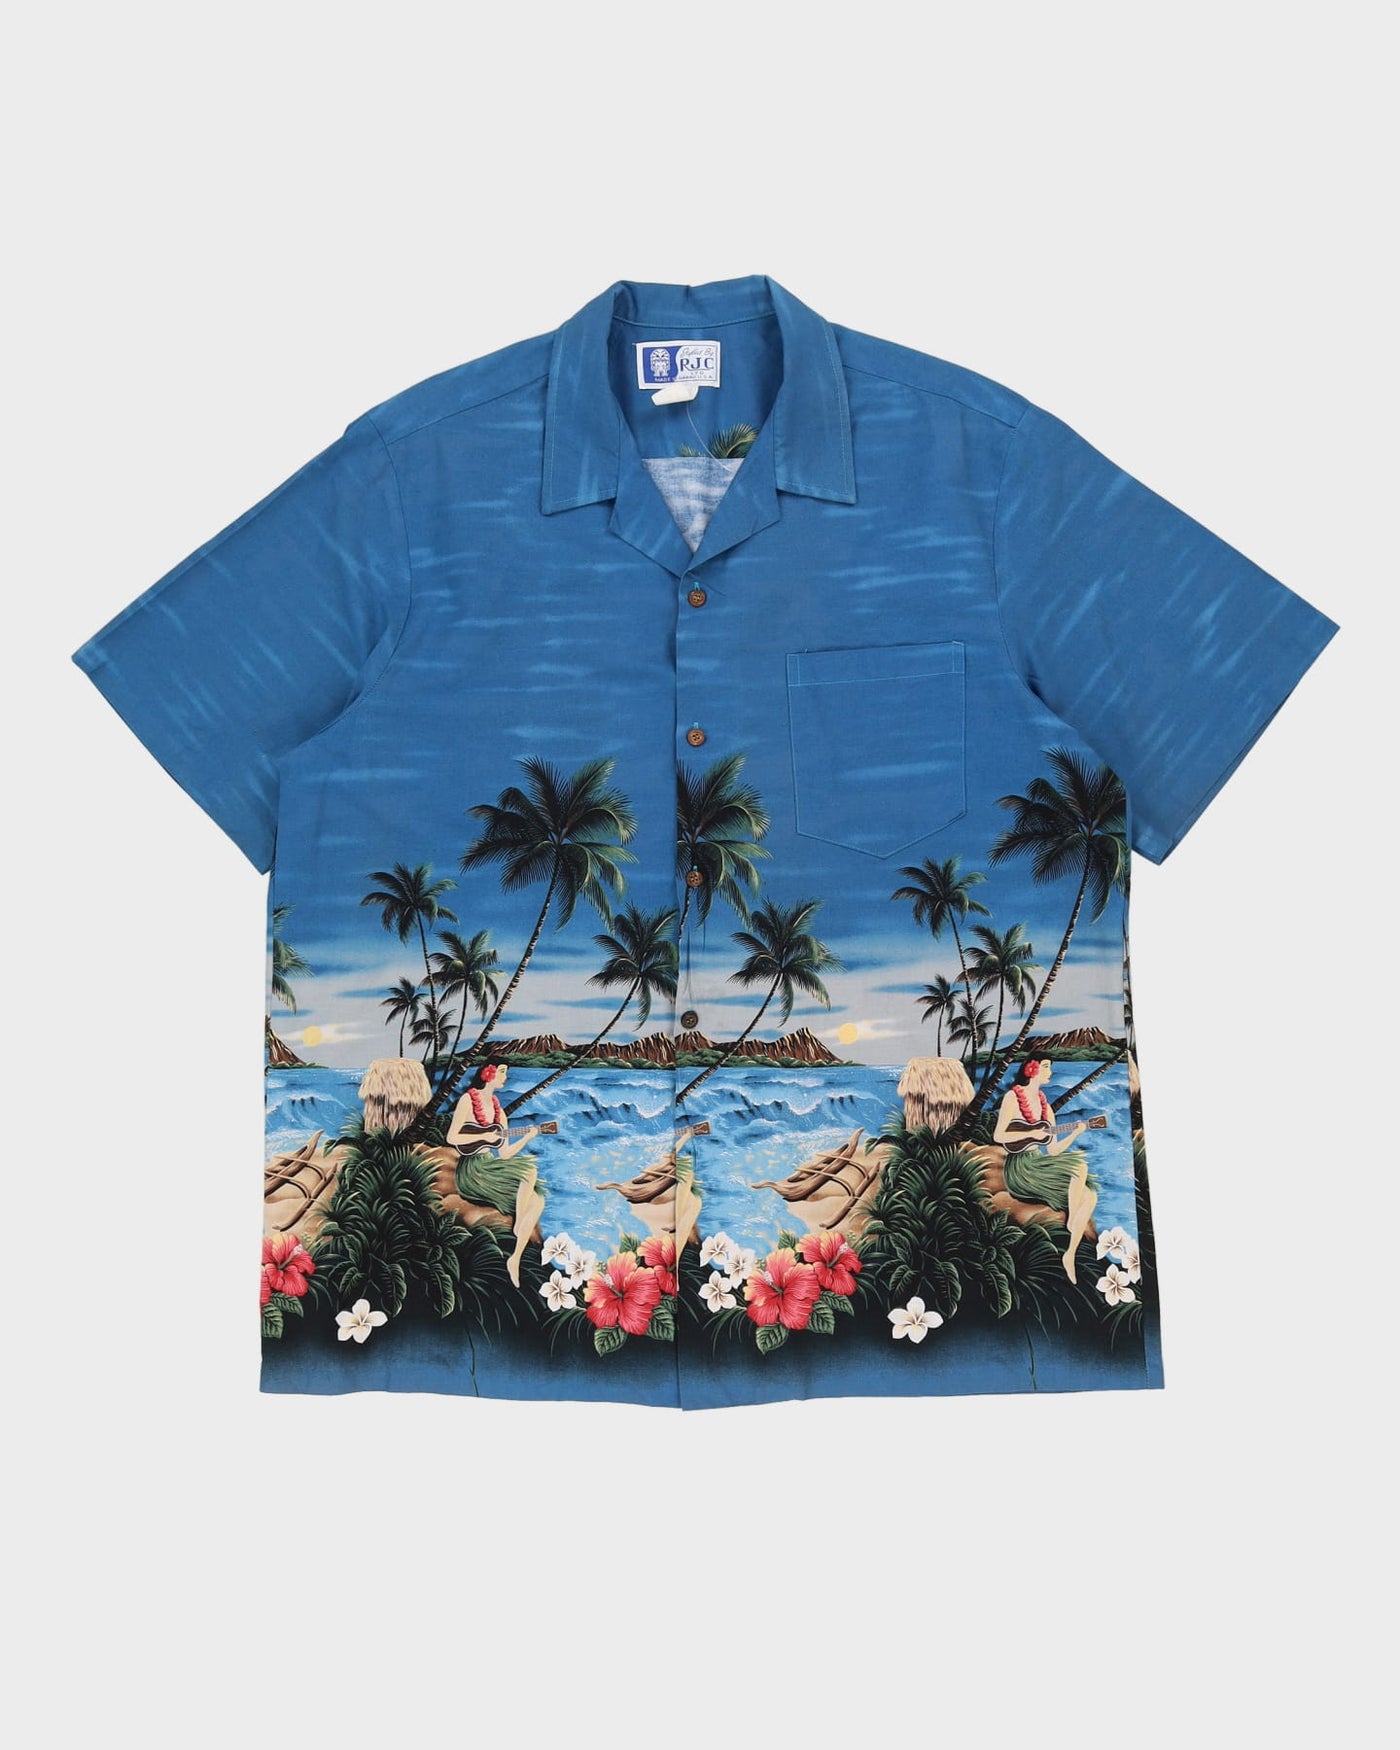 Vintage 90s RJC Blue Island Print Hawaiian Shirt - XL